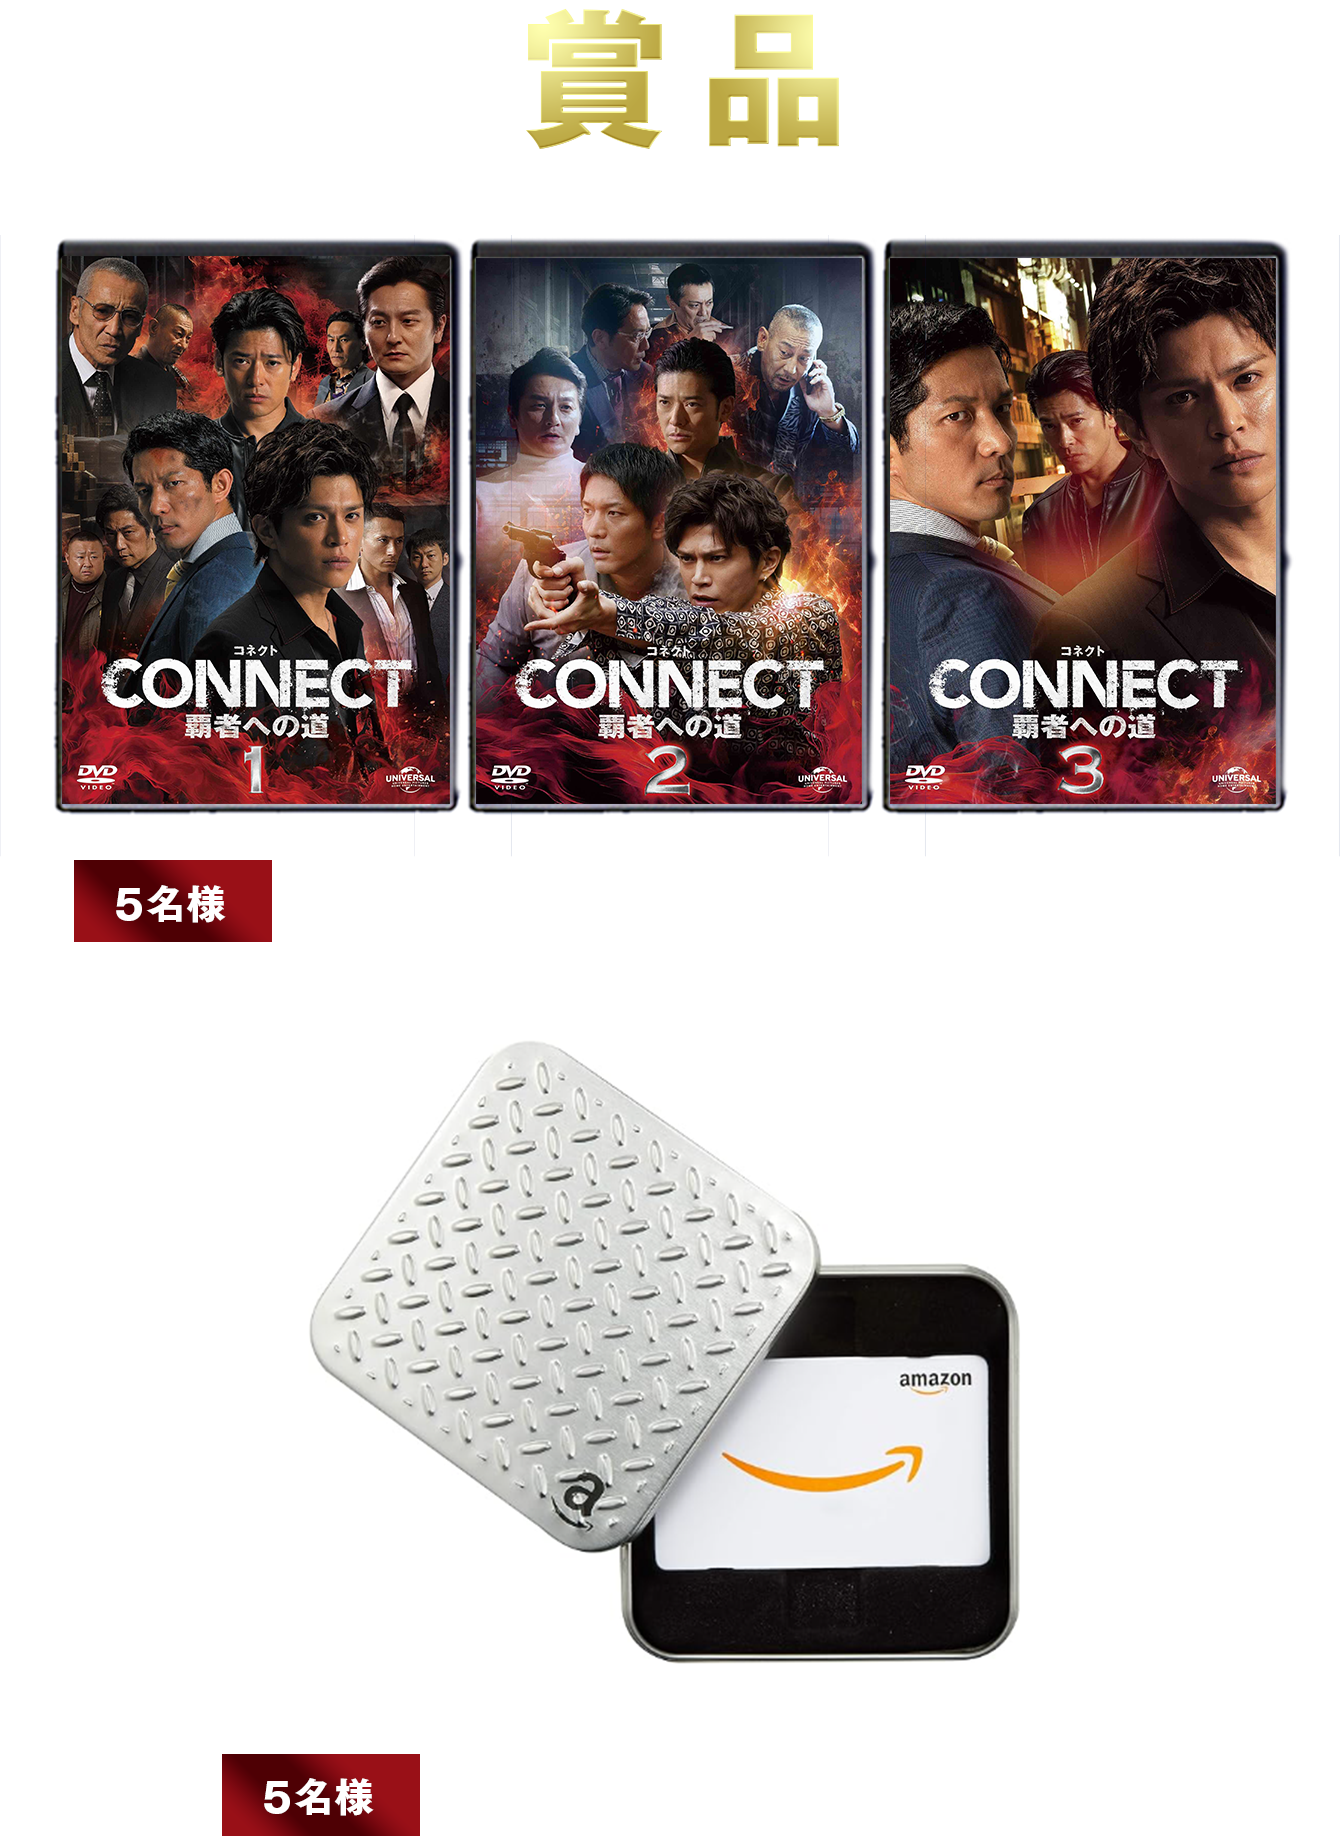 DVD「CONNECT -覇者への道-」1・２・３のセット【5名様】、Amazonギフトカード（5000円分）【5名様】